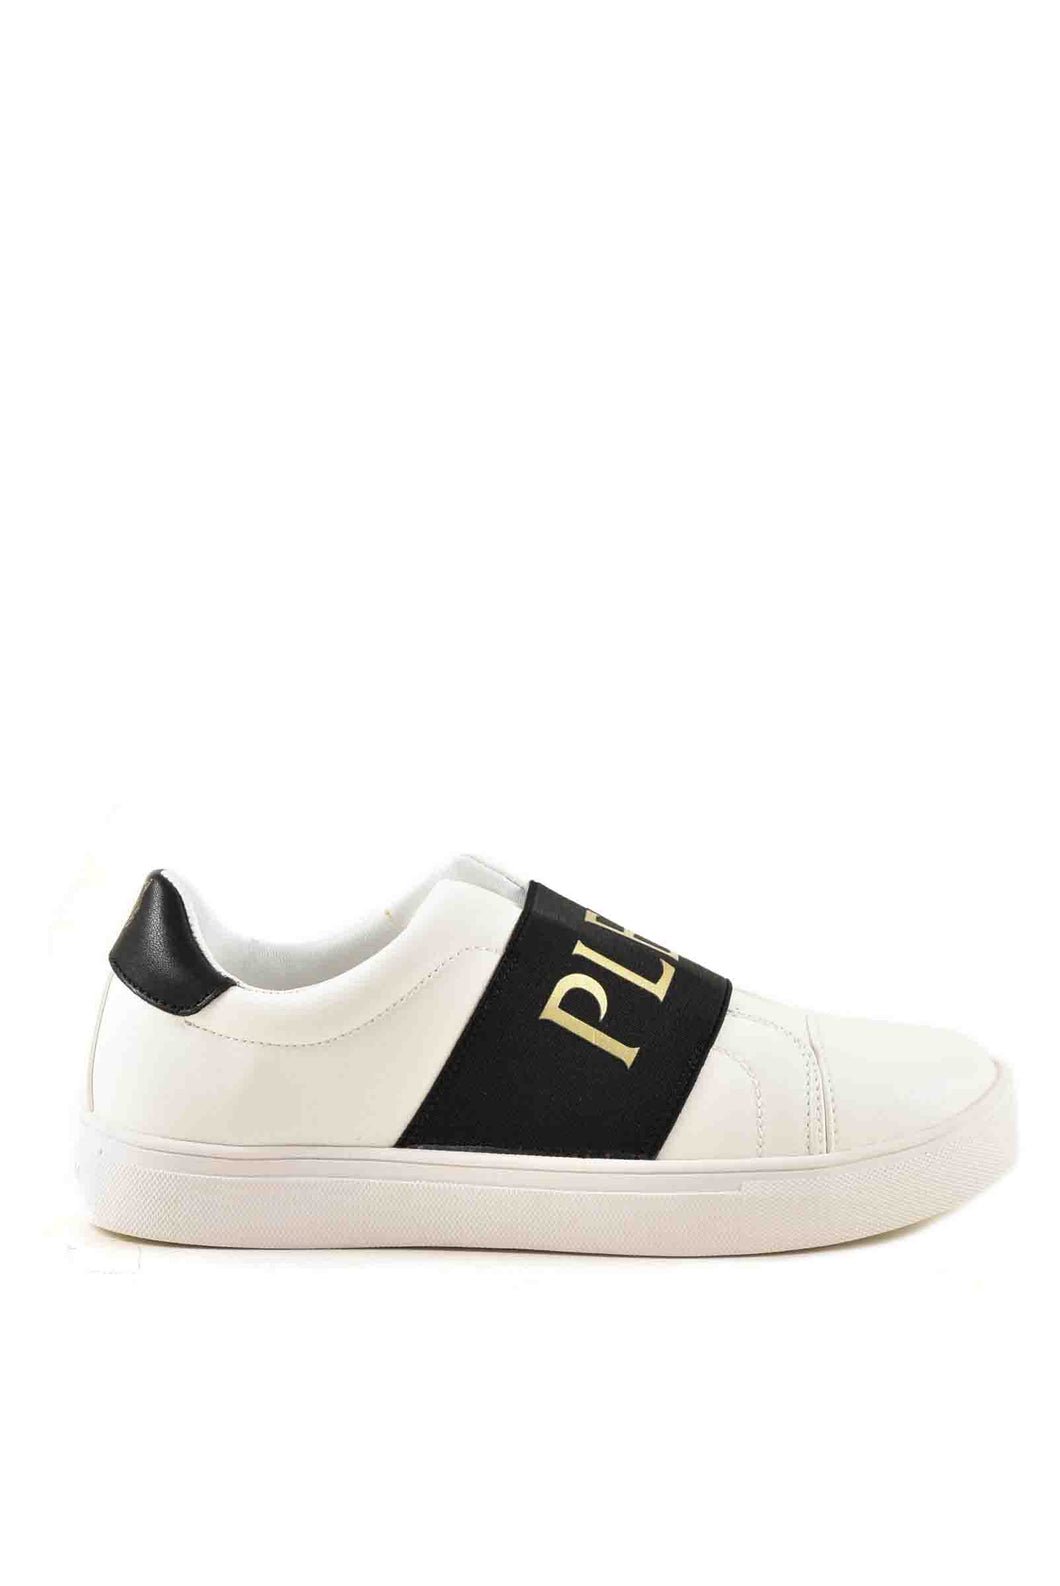 Plein Sport Women's Slip-On Sneakers DISP708 White with Logo